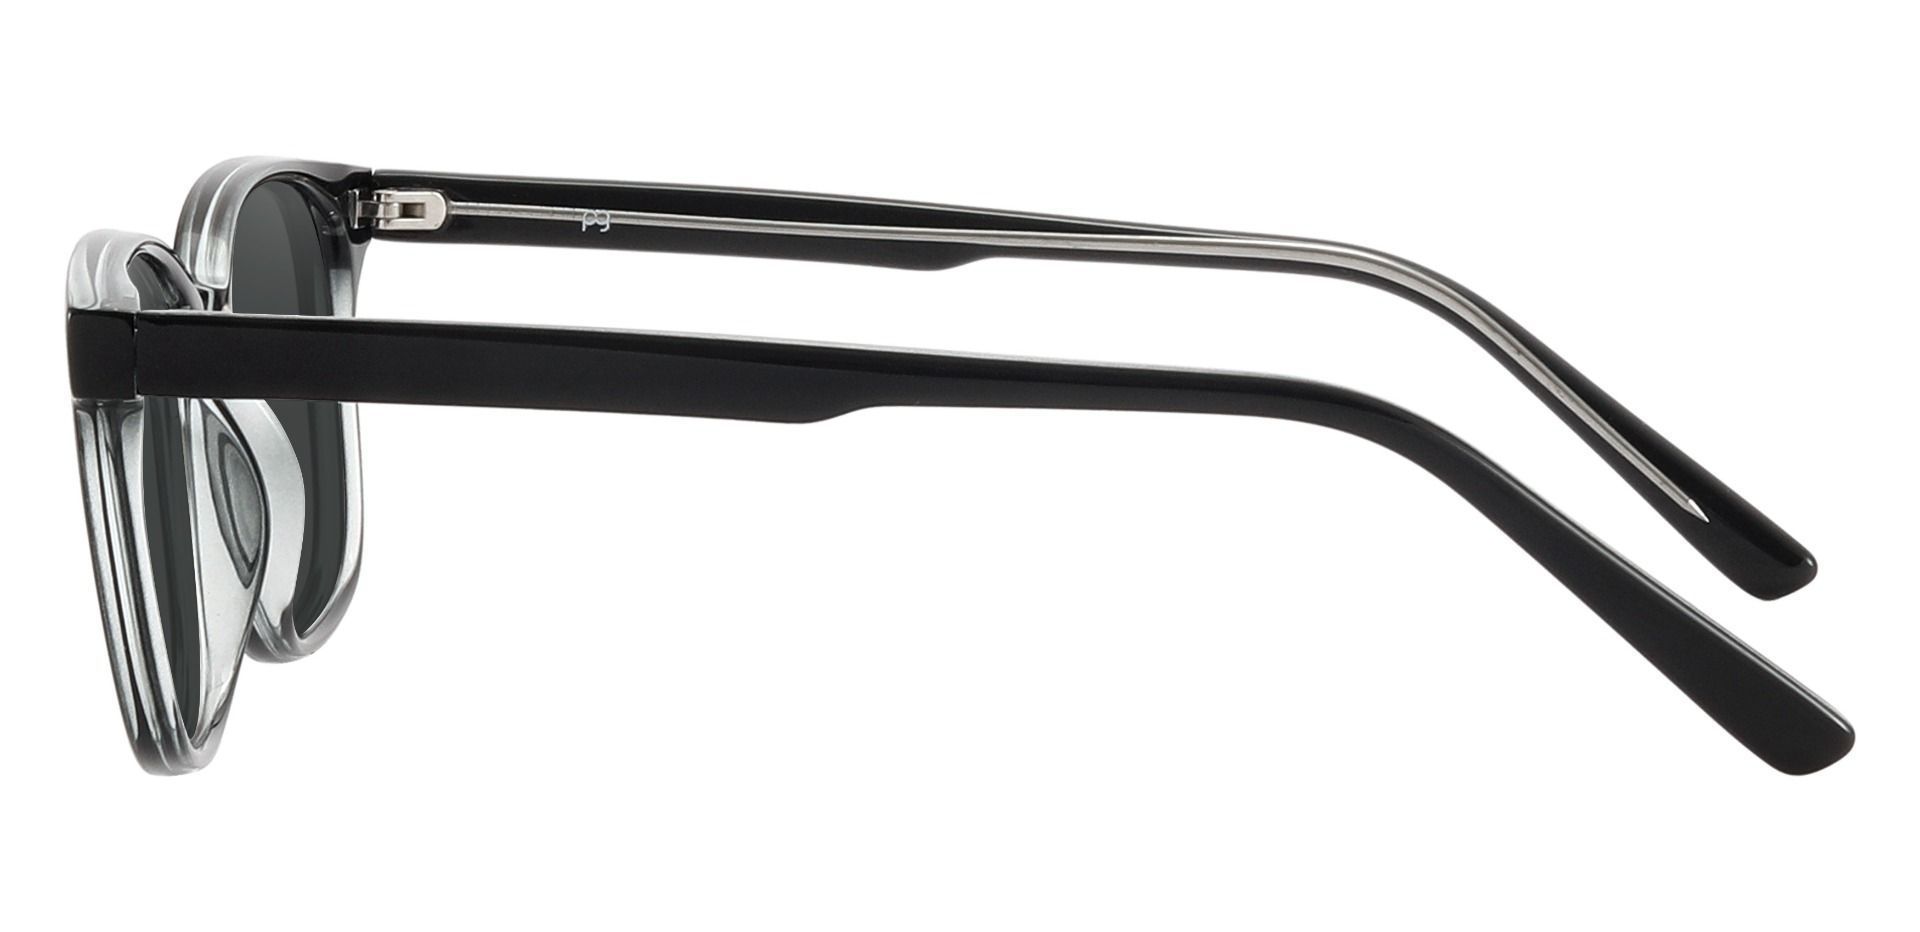 Windsor Rectangle Lined Bifocal Sunglasses - Black Frame With Gray Lenses